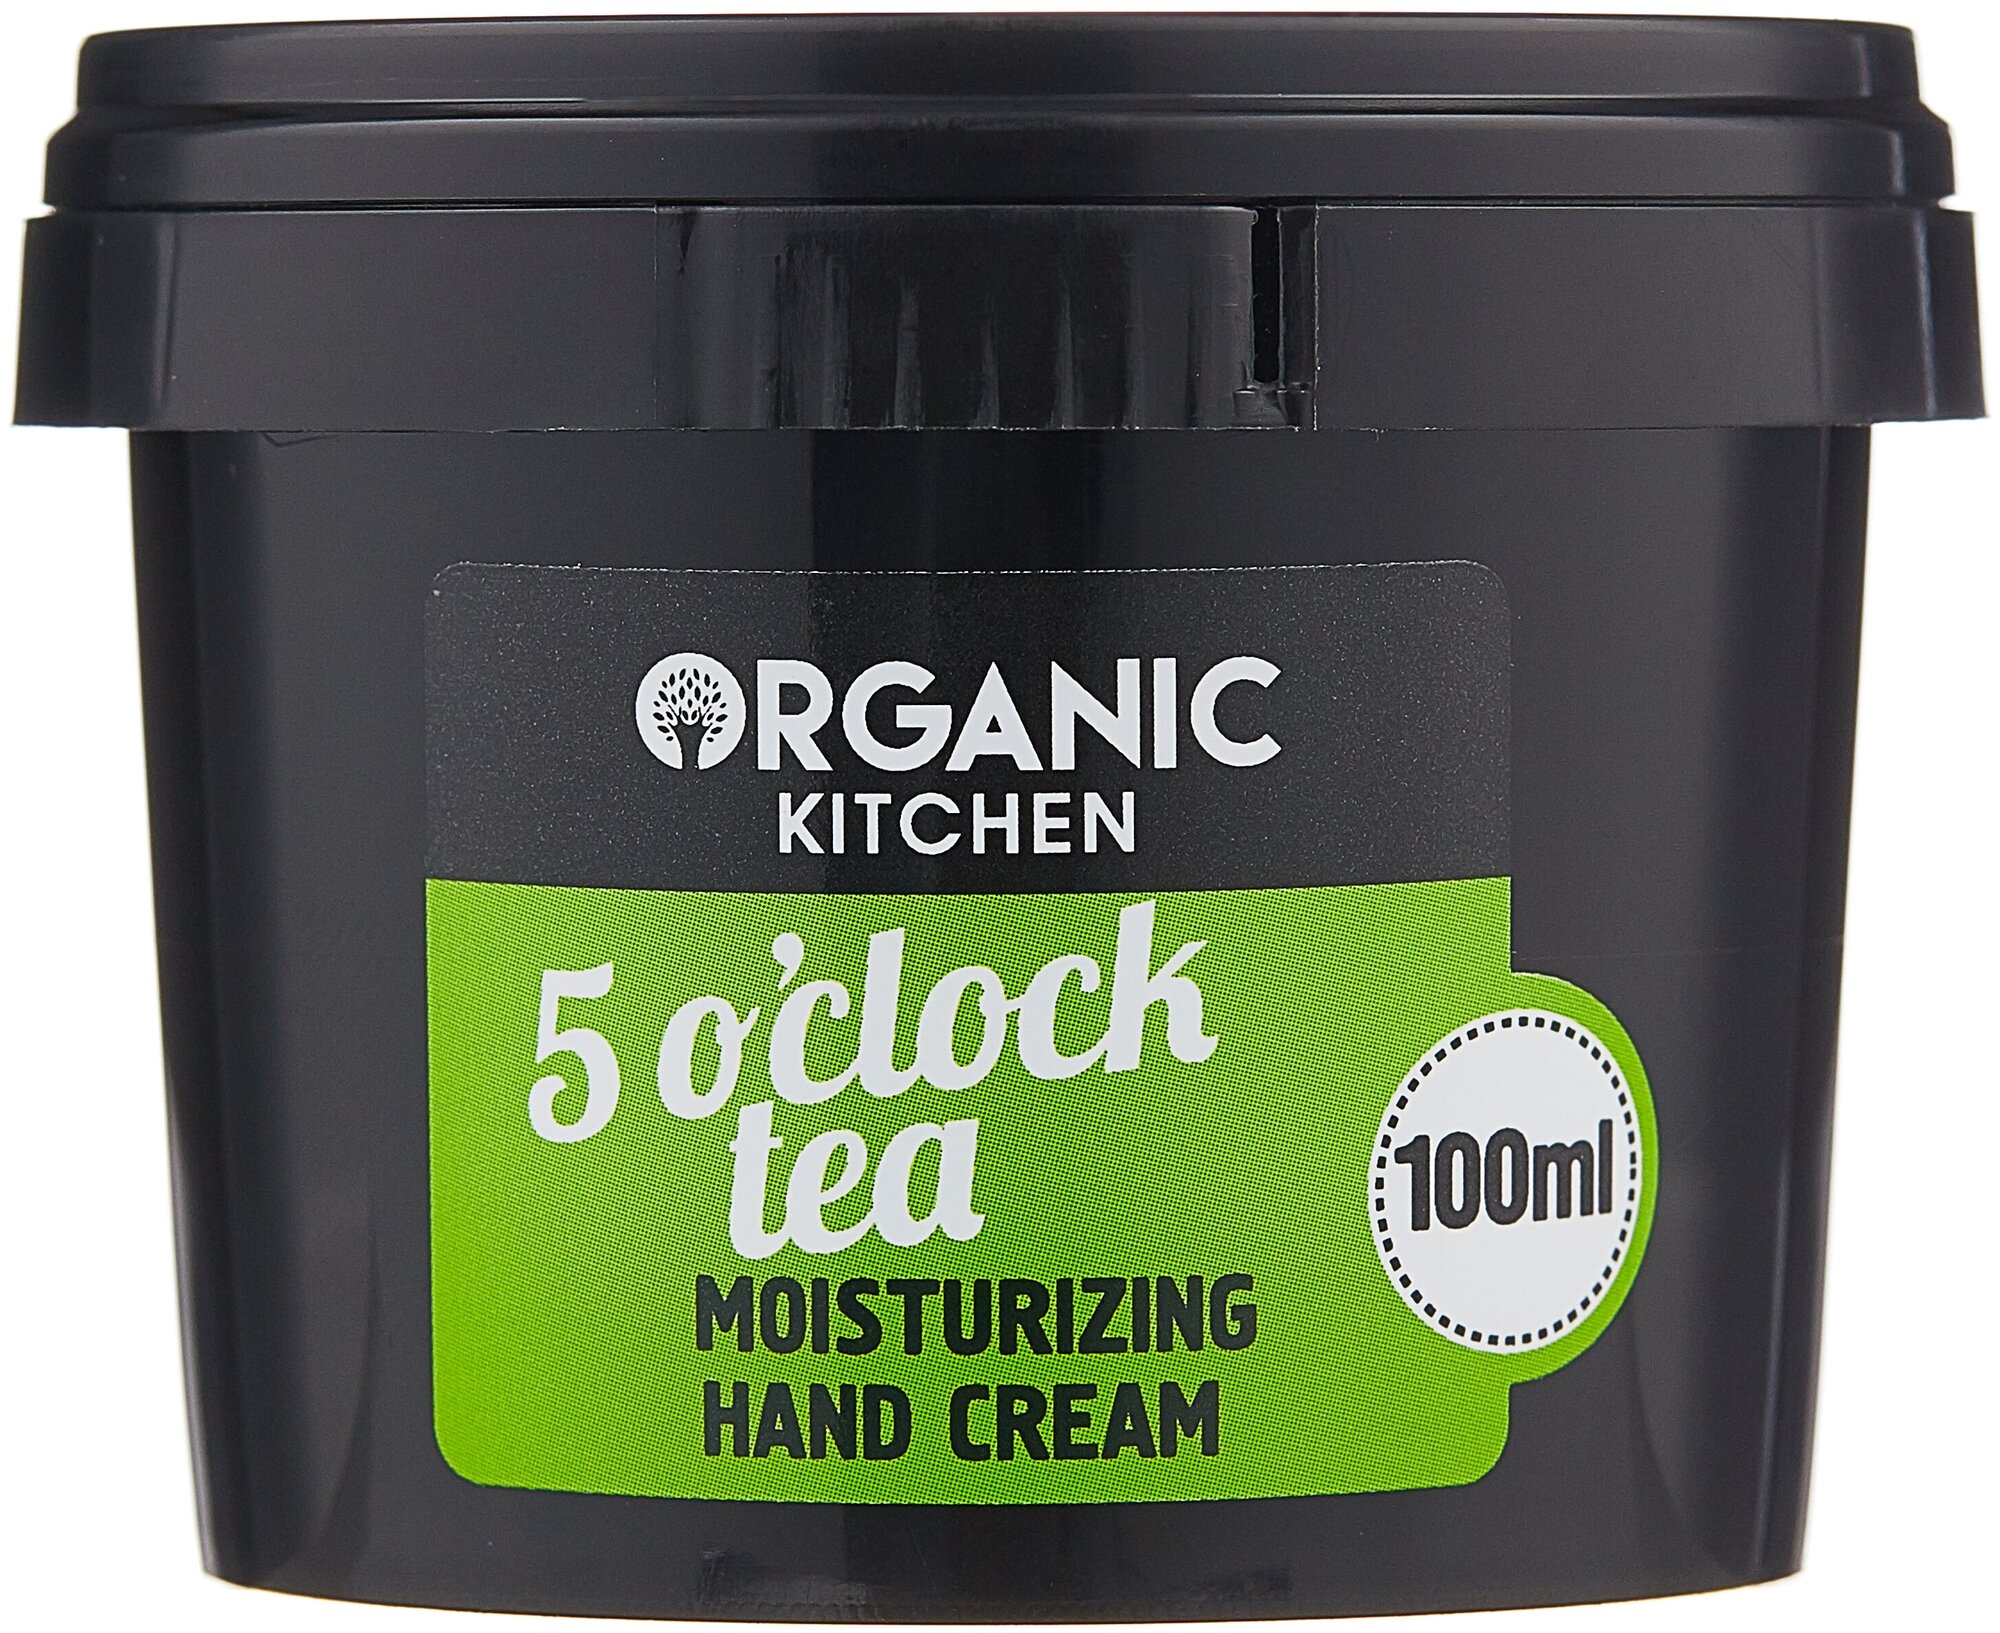 Organic Kitchen Крем для рук 5 o'clock tea